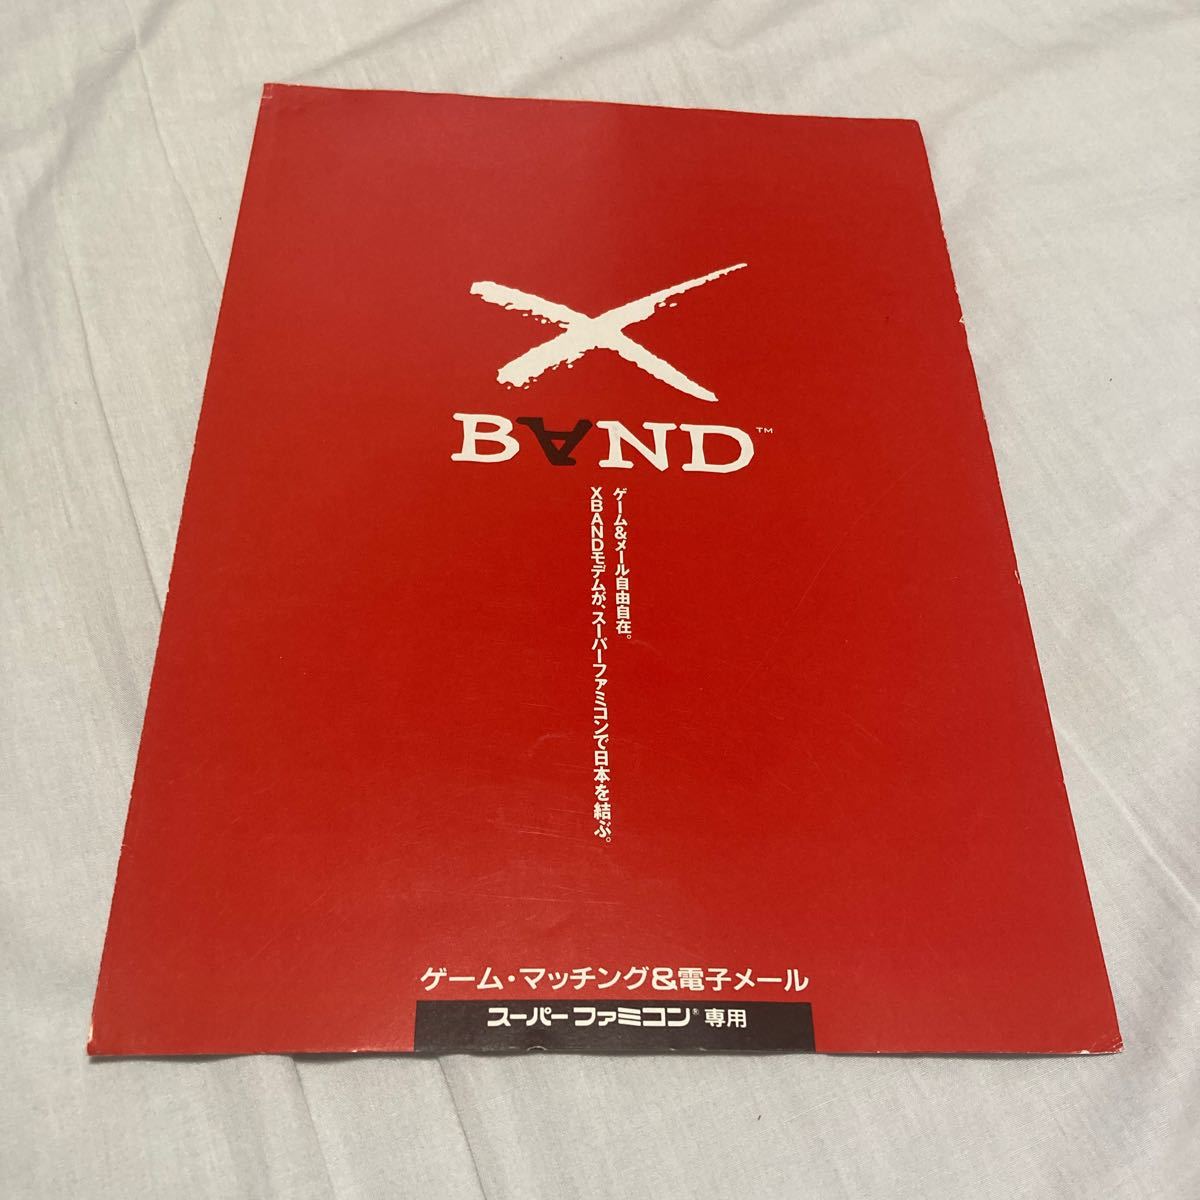 XBANDモデム スーパーファミコン チラシ カタログ フライヤー パンフレット 正規品 即売 希少 非売品 販促の画像1